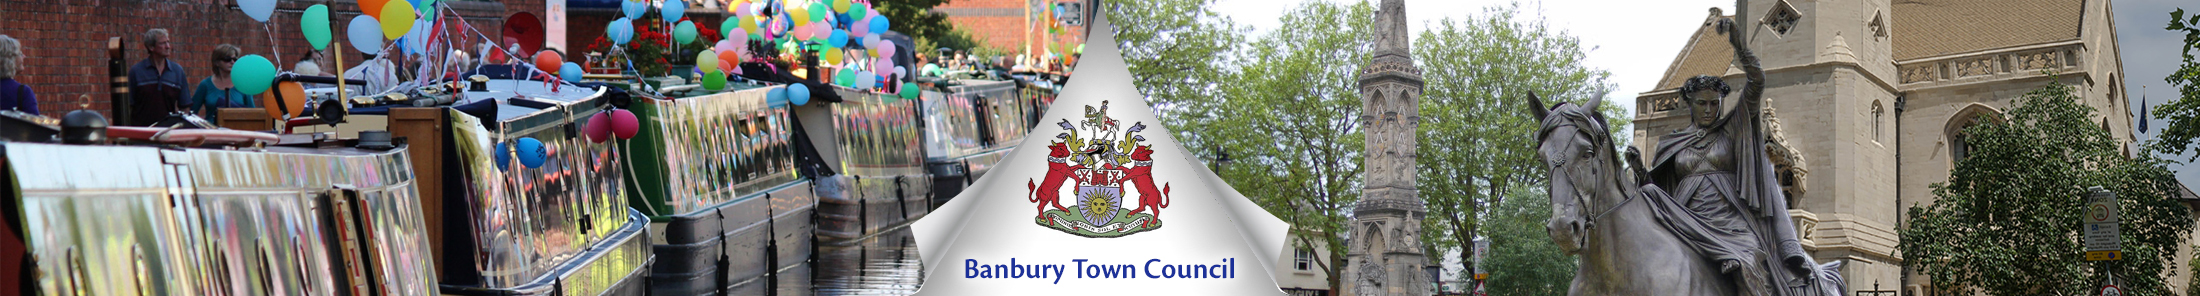 Header Image for Banbury Town Council